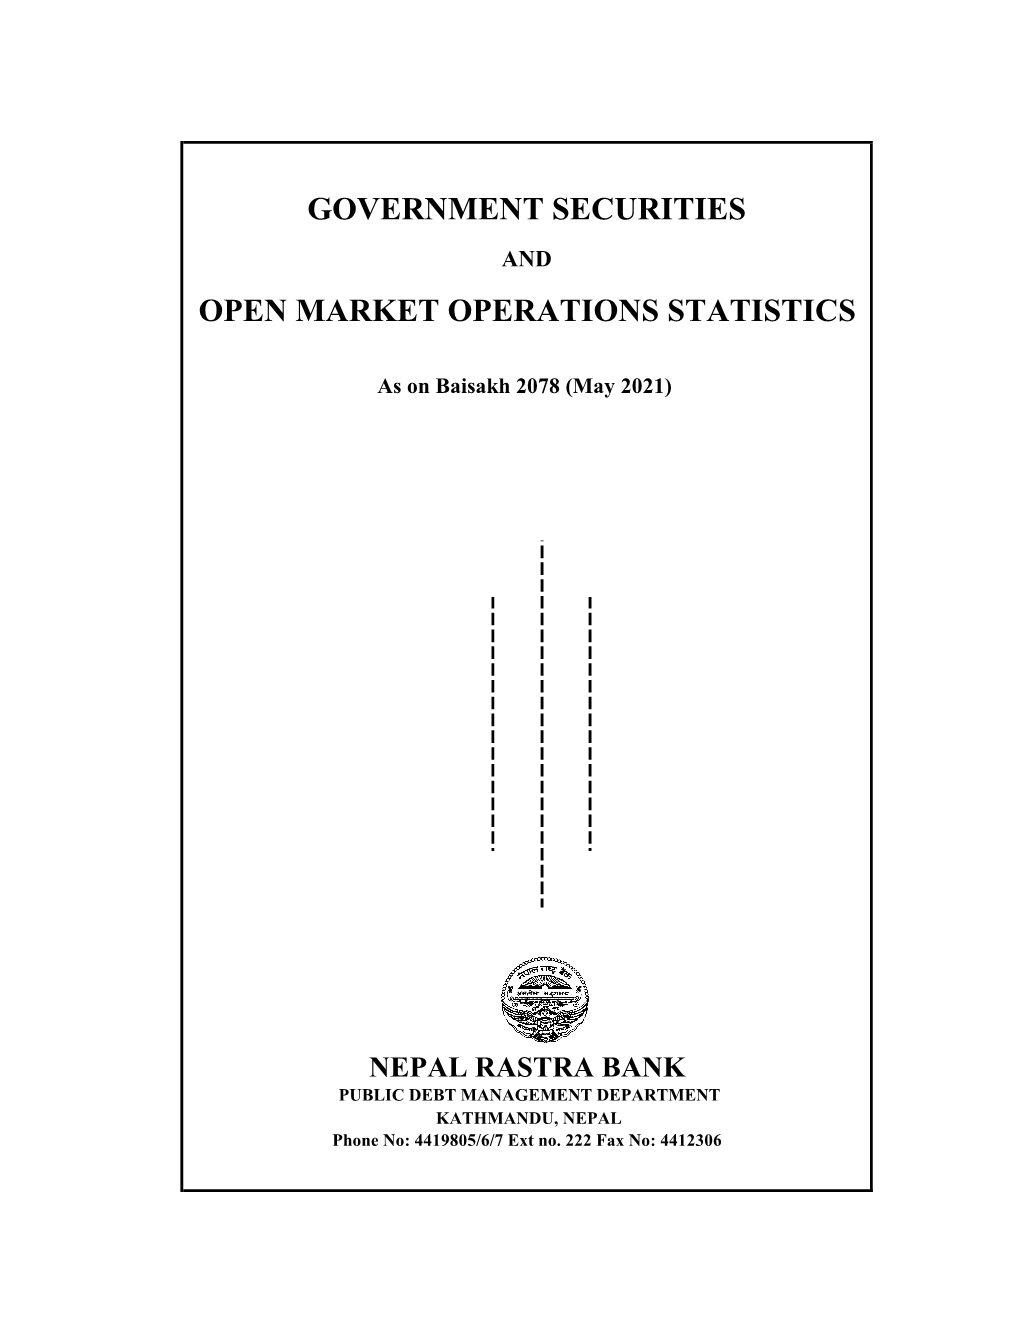 Open Market Operations Statistics